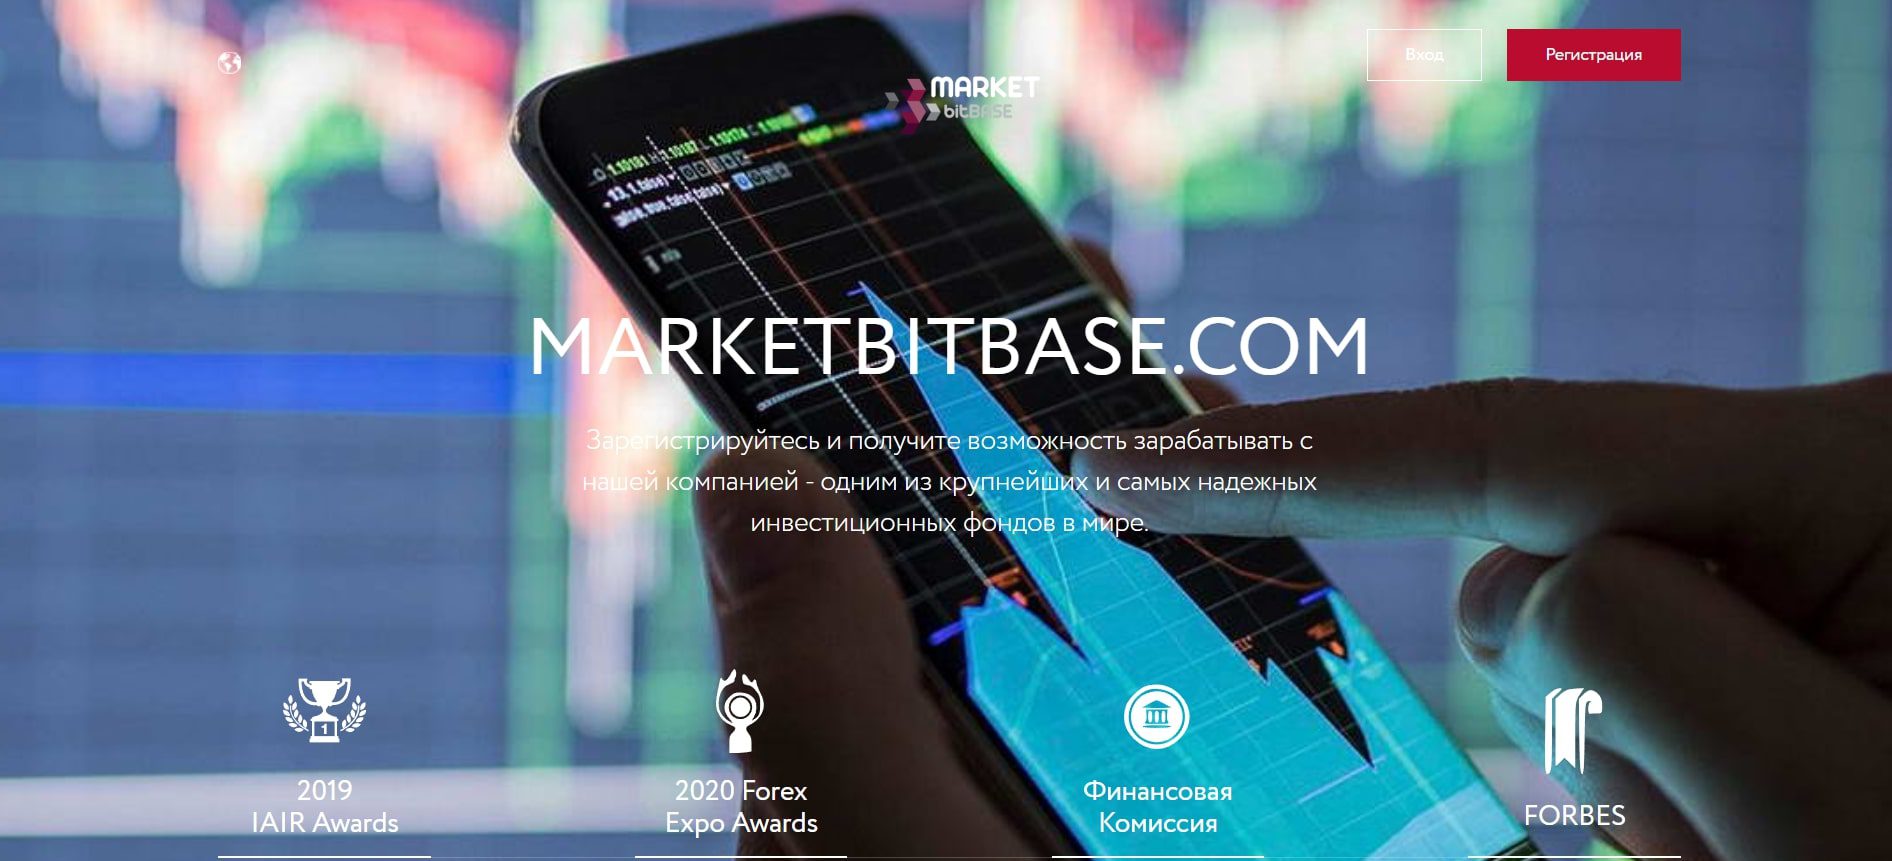 Сайт Marketbitbase.com